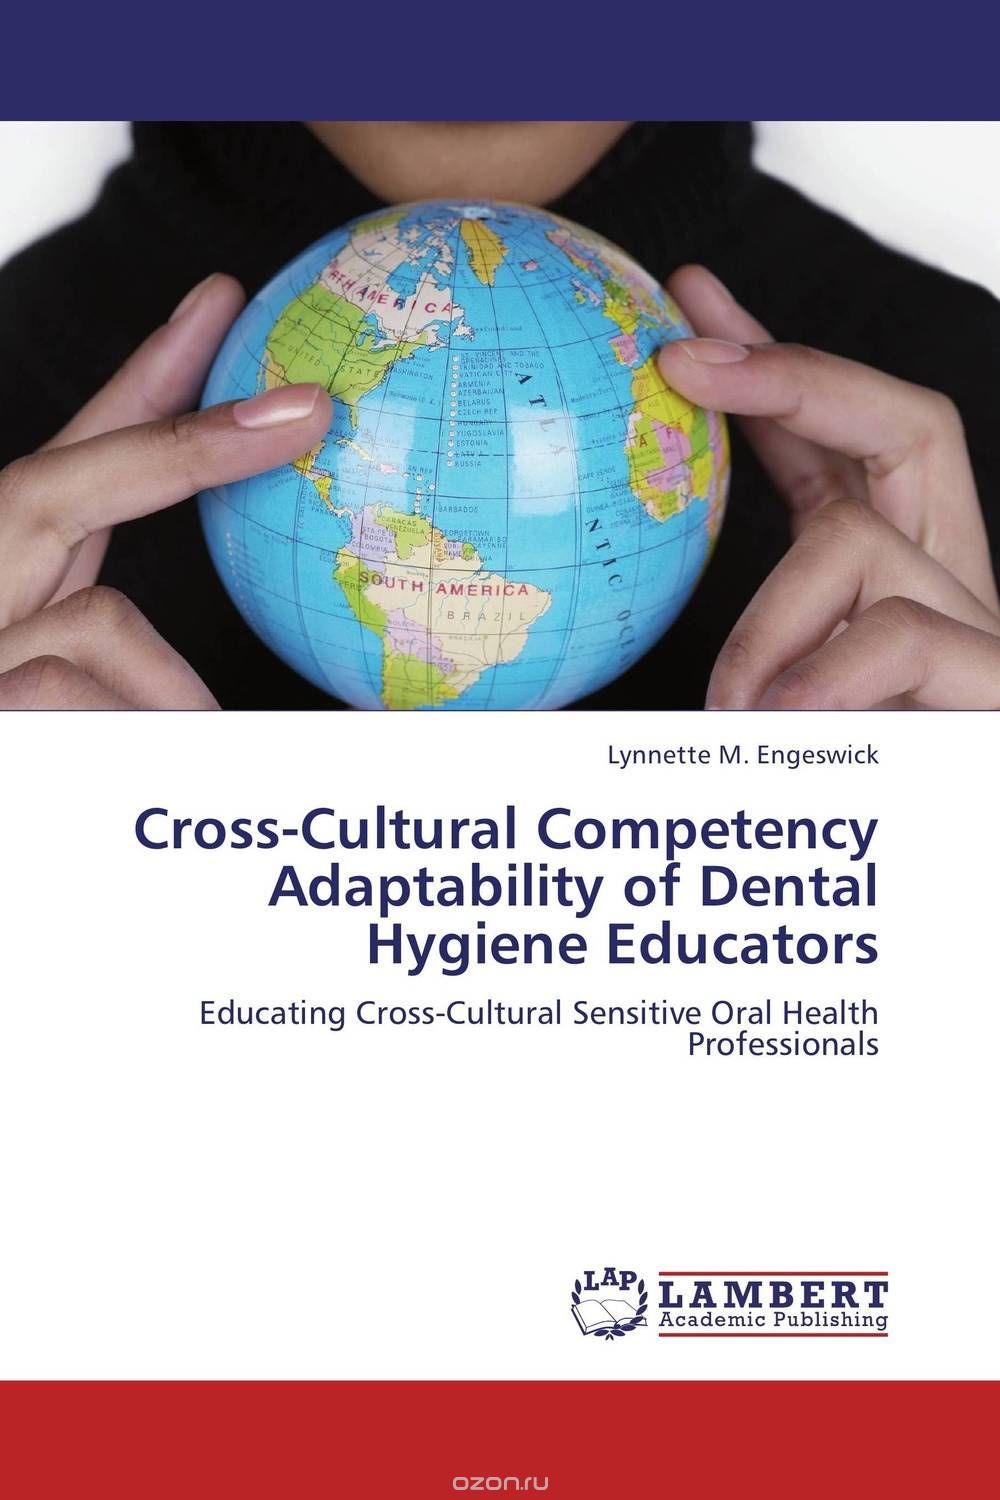 Скачать книгу "Cross-Cultural Competency Adaptability of Dental Hygiene Educators"